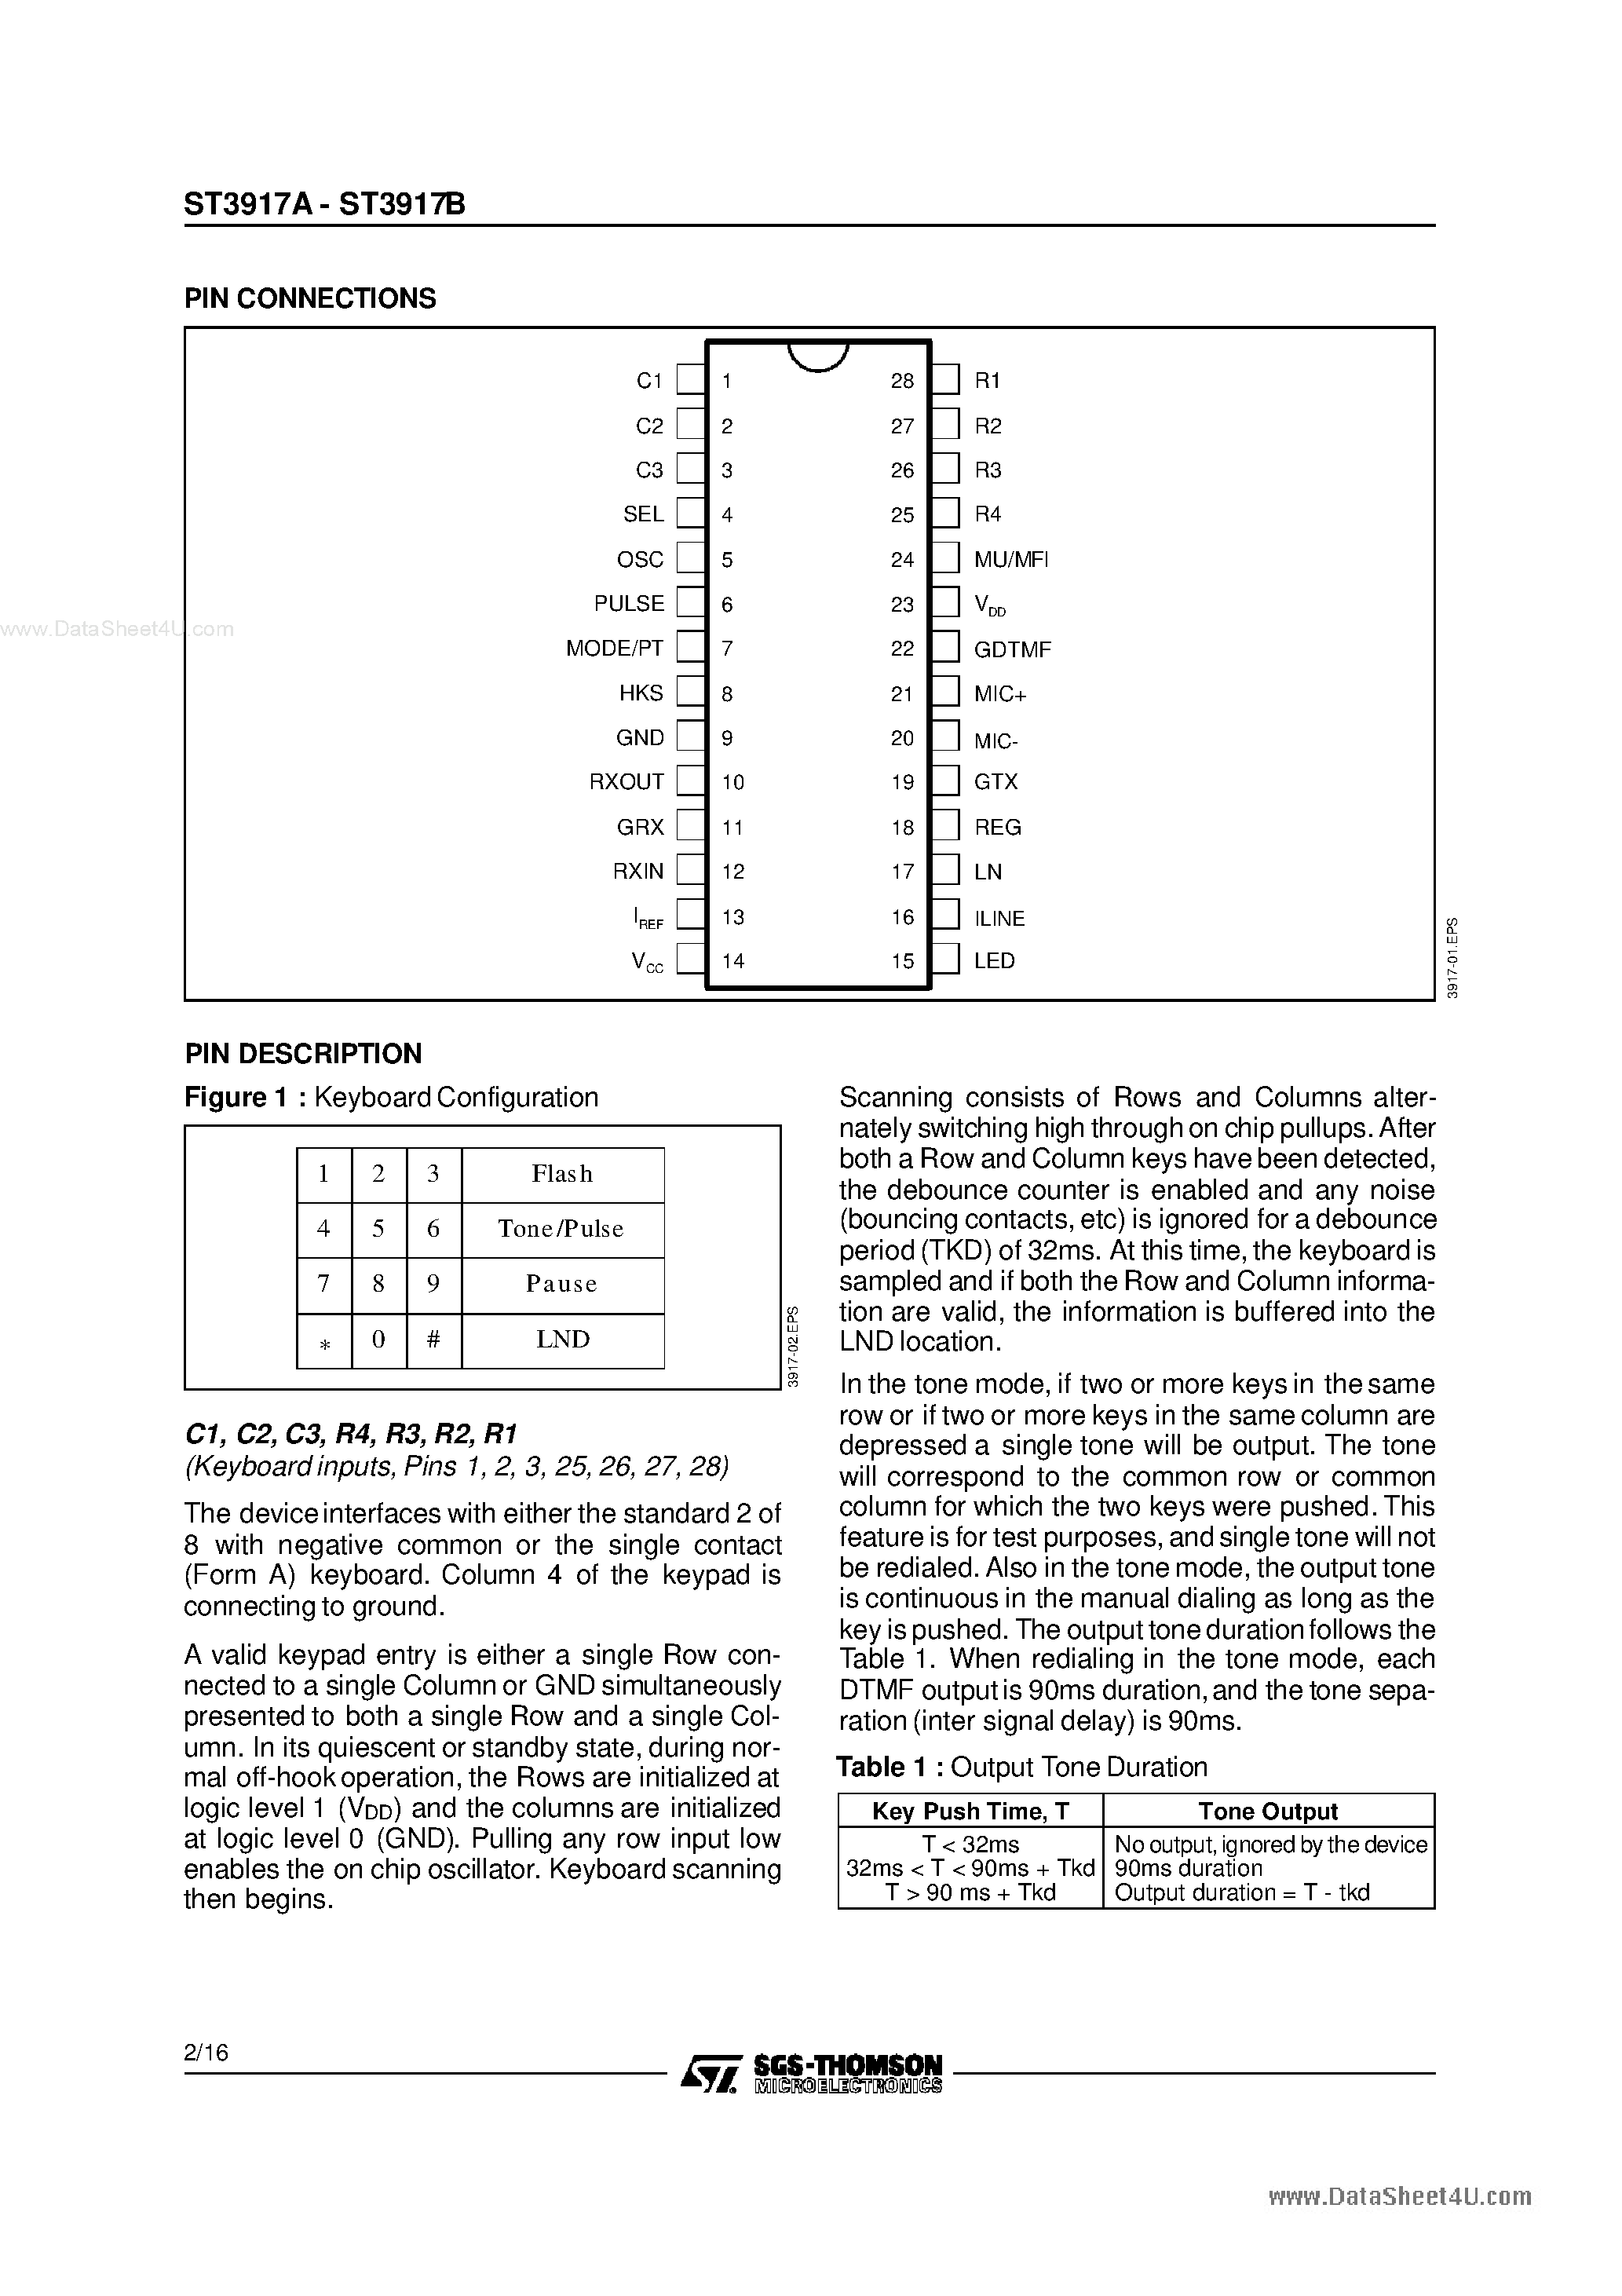 Datasheet ST3938A - SPEECH - TONE/PULSE DIALER - LED INDICATOR page 2